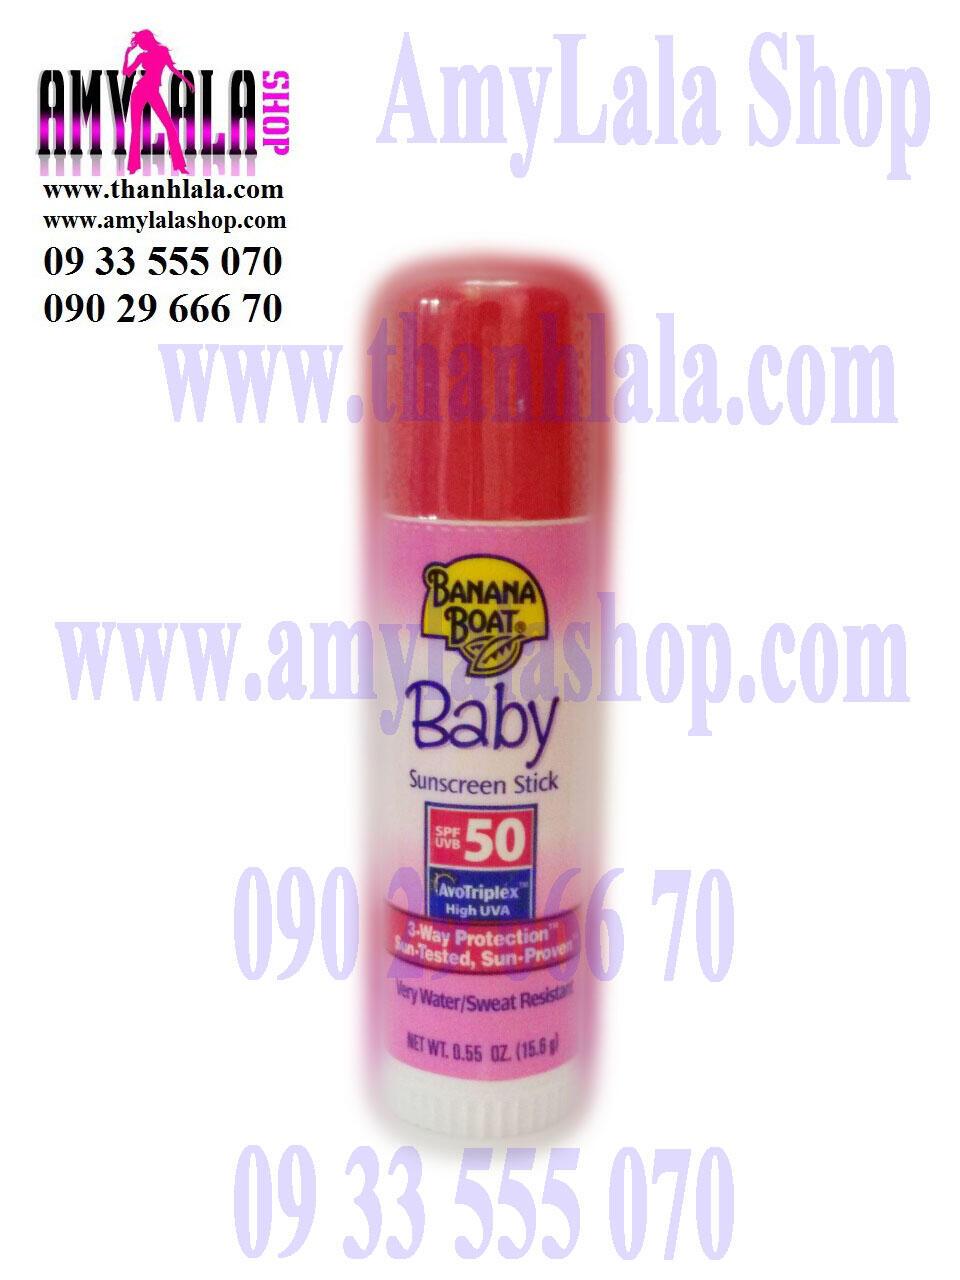 Thanh lăn chống nắng Banana Boat Baby Face & Body Stick Suncreen SPF50/UVA/UVB 15.6g - - 0933555070